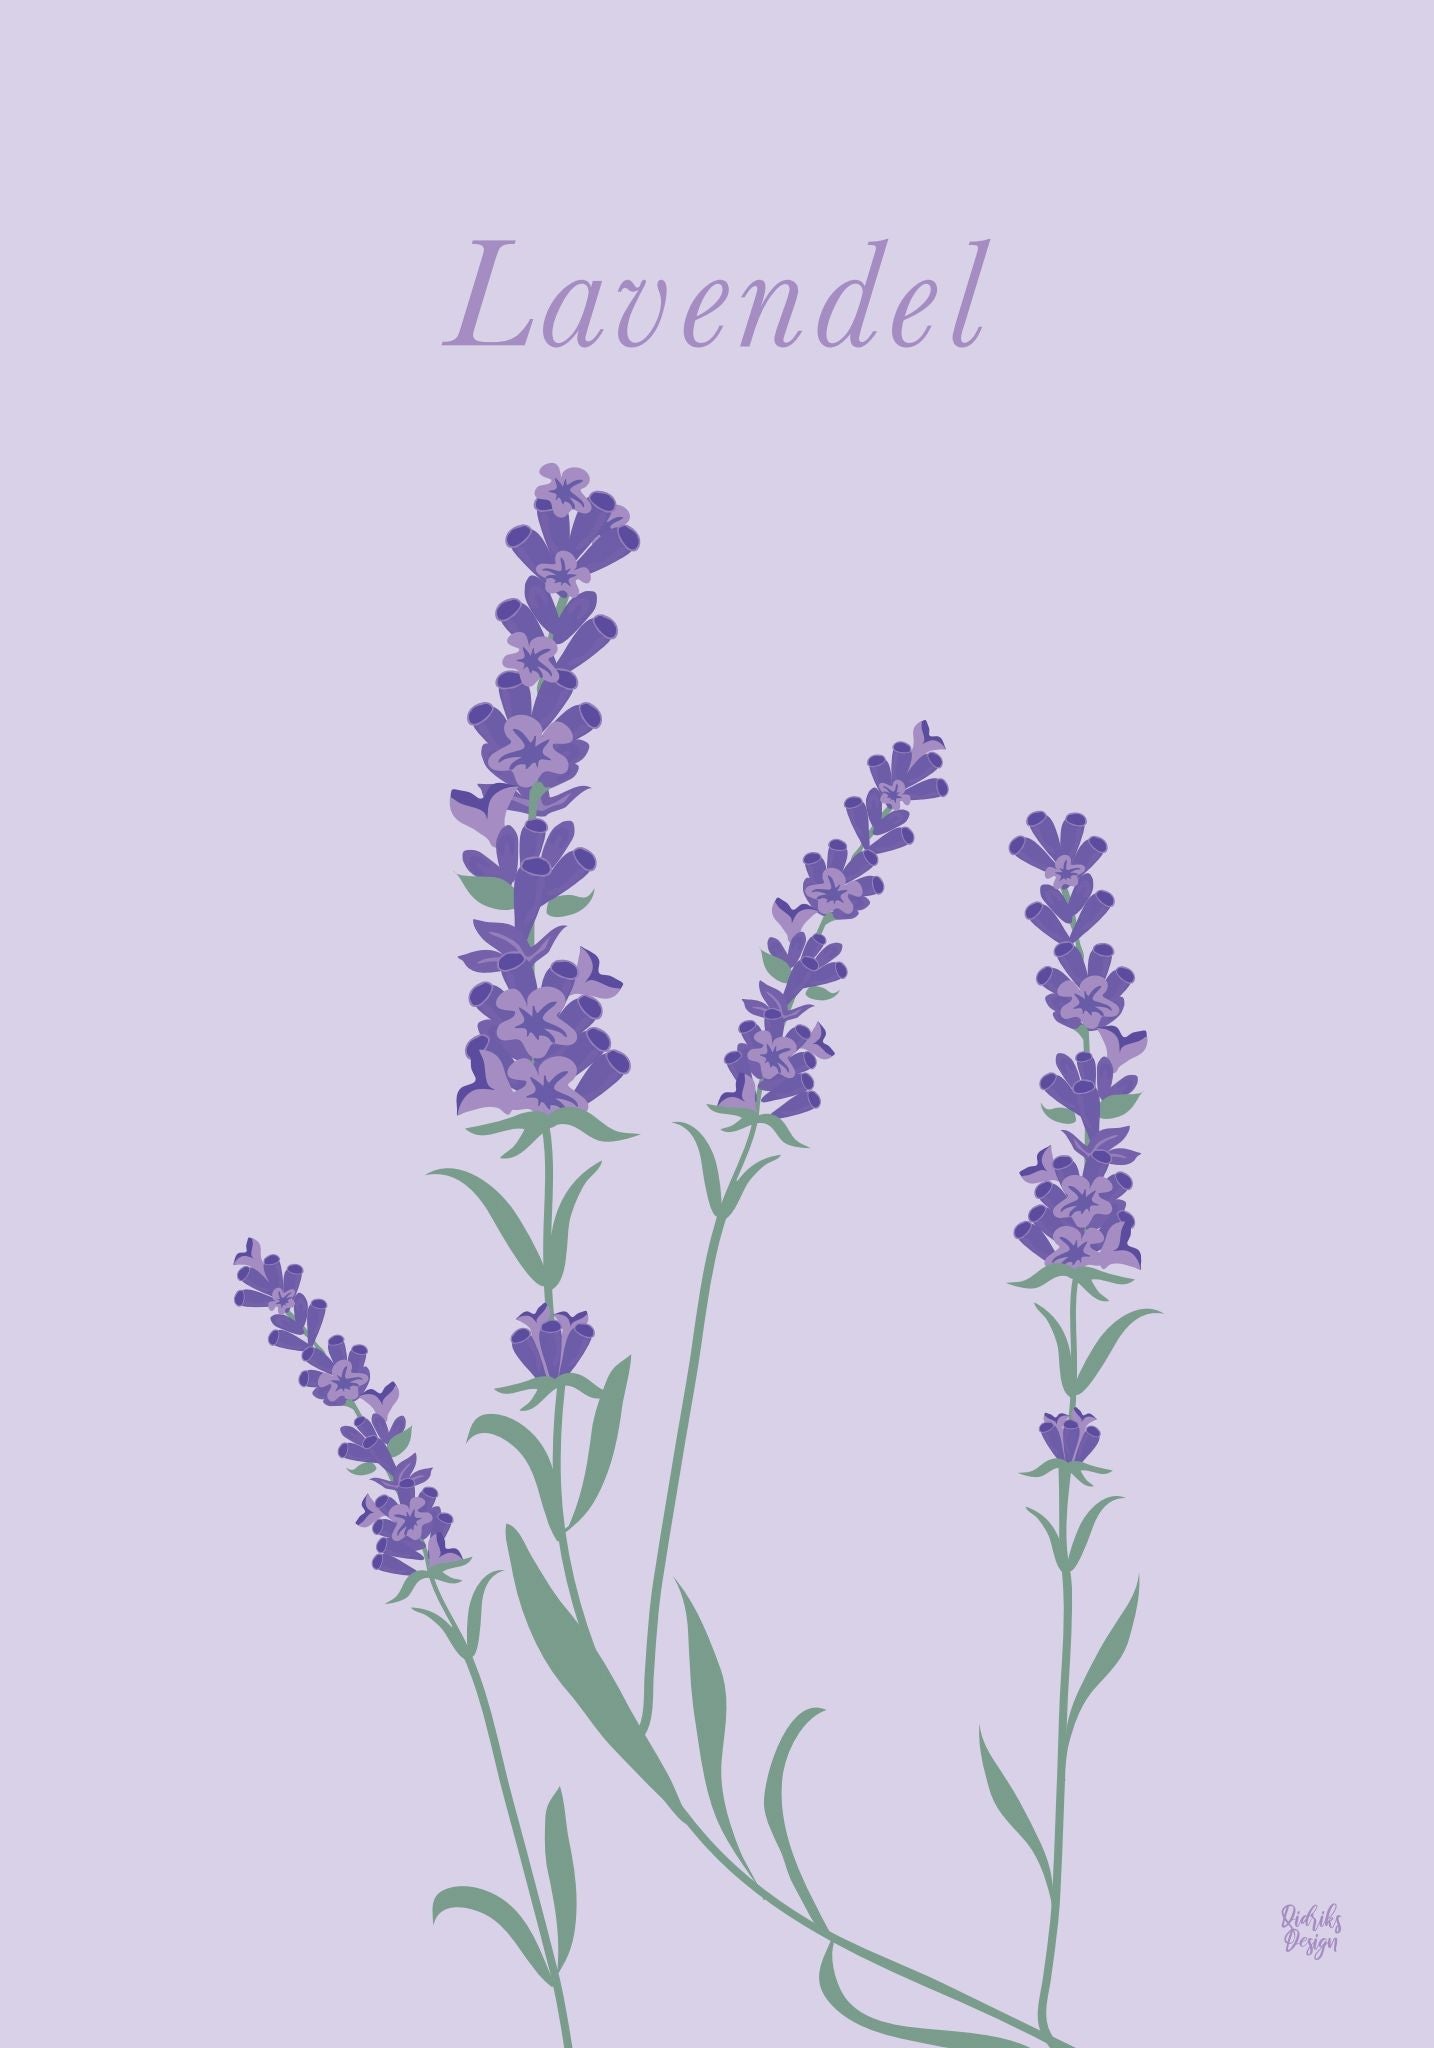 Lavendel poster